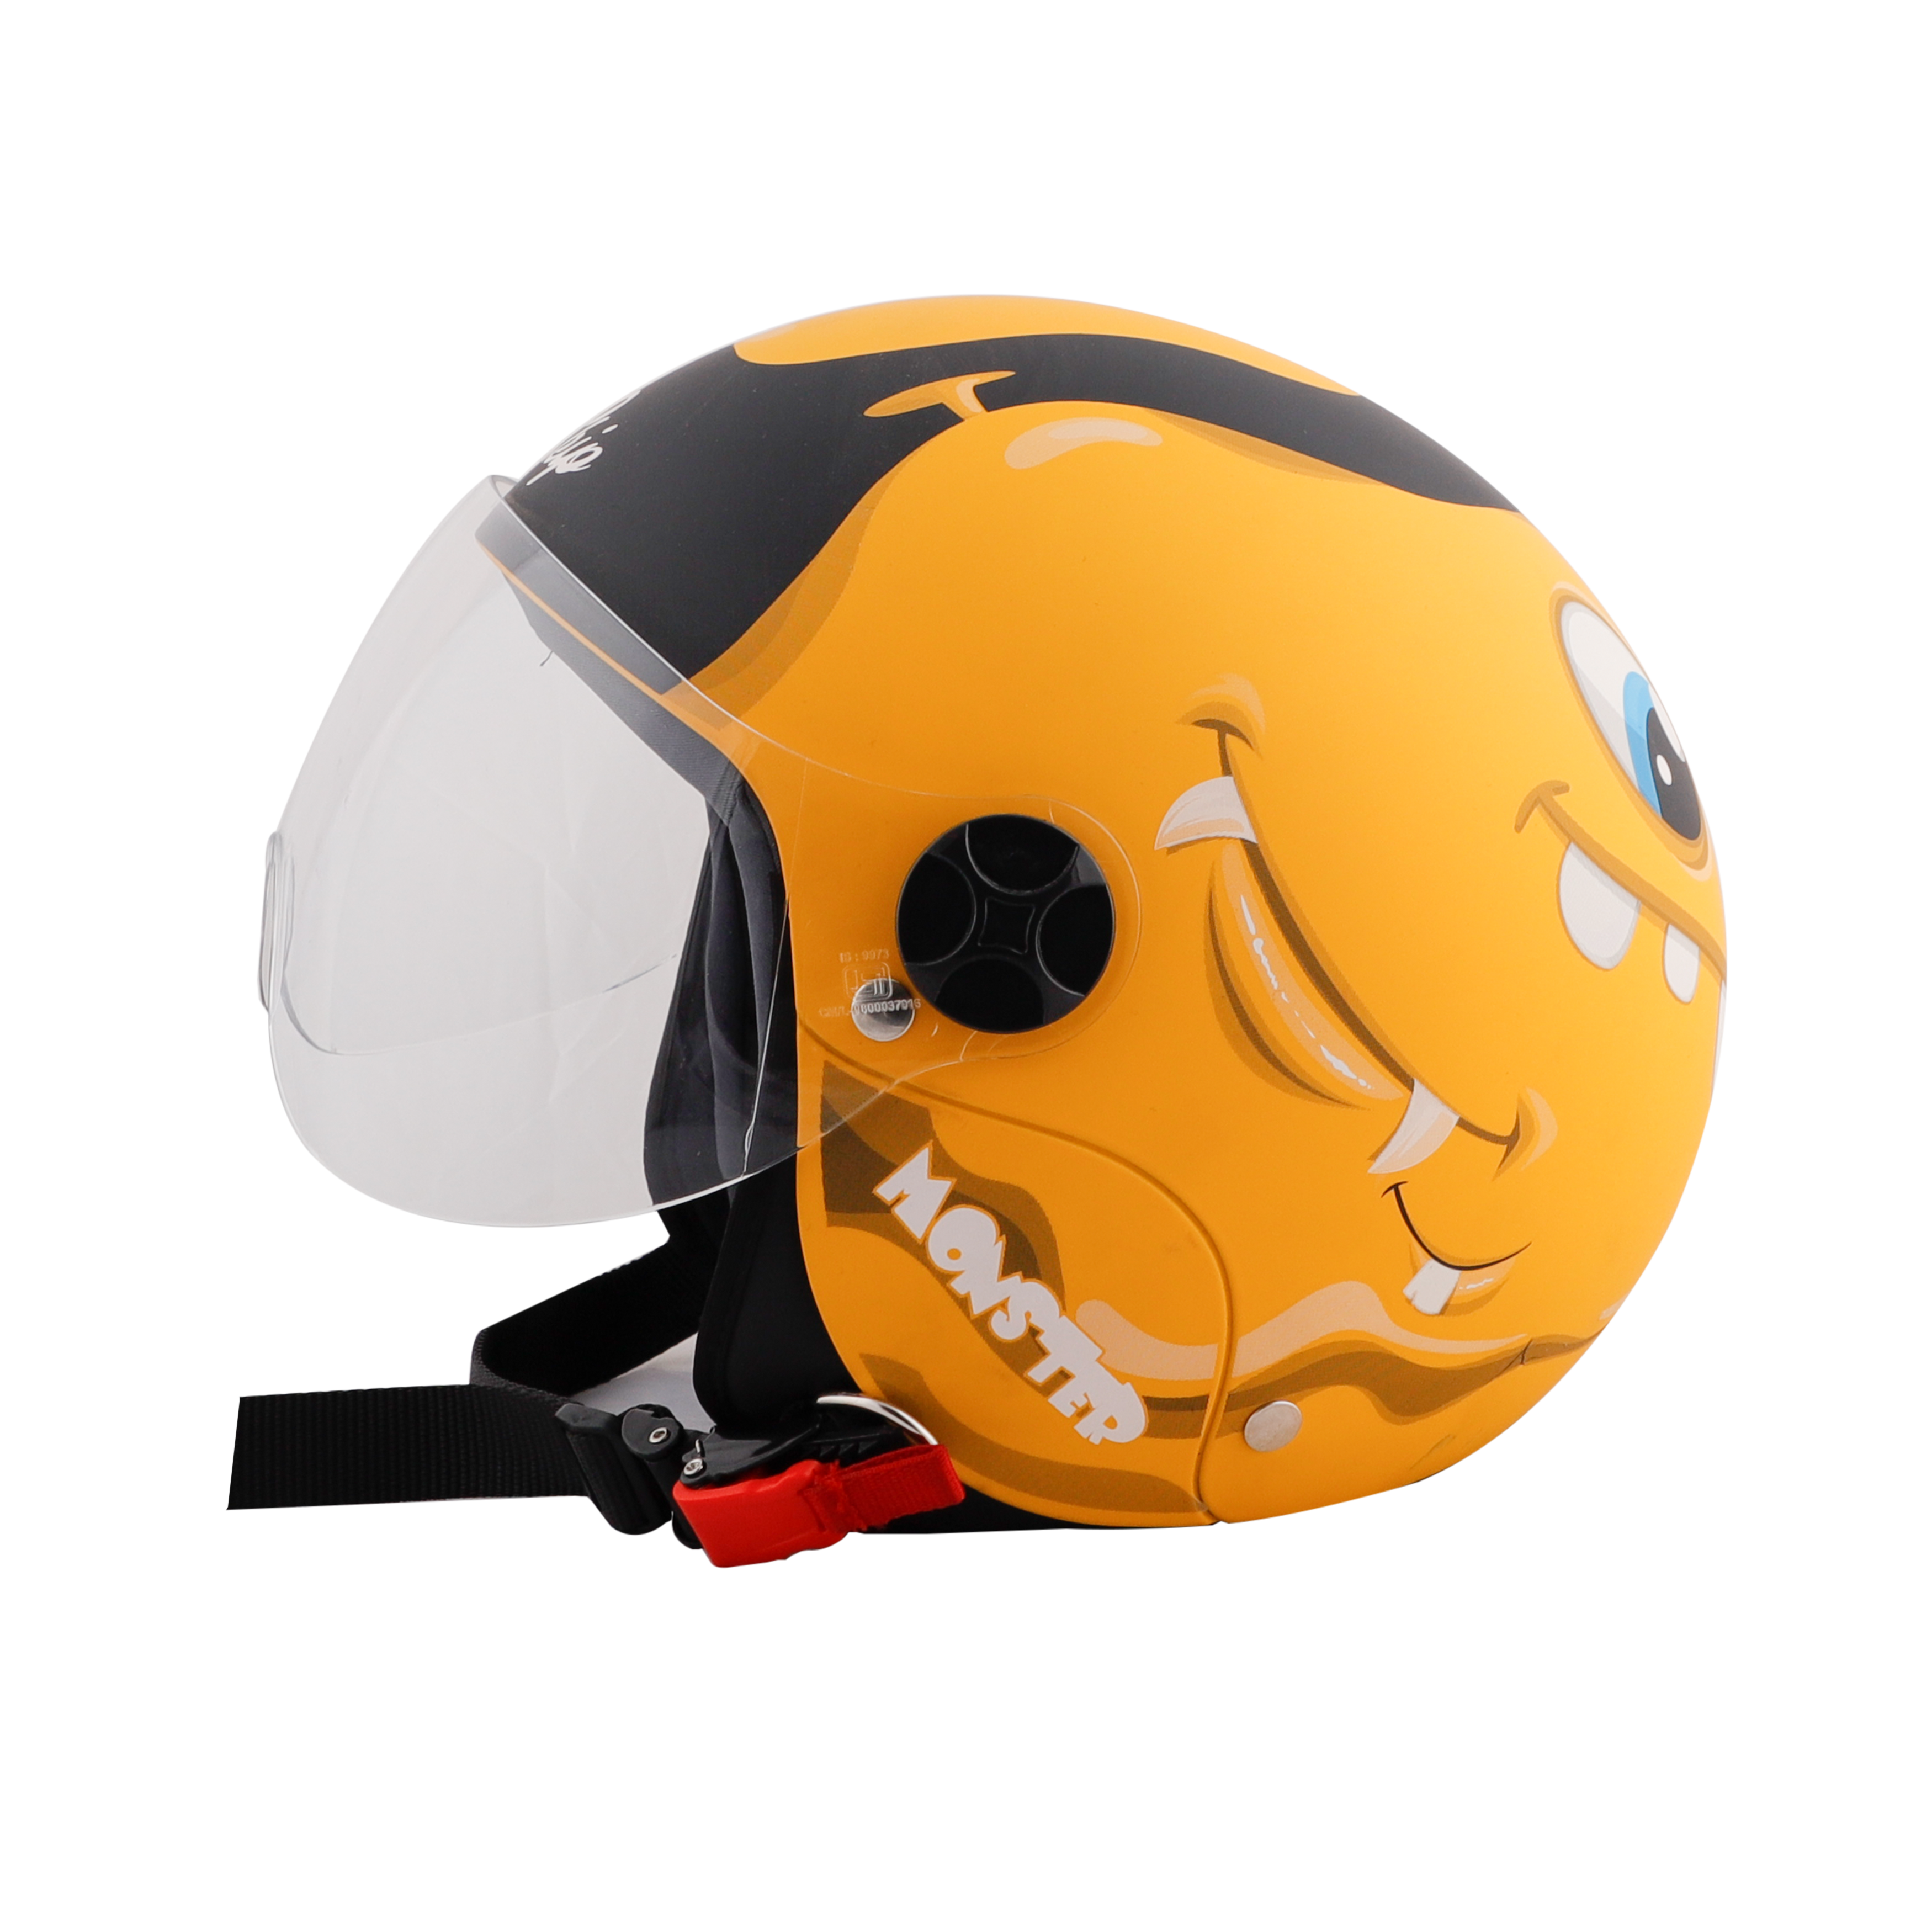 Steelbird Skip Toad Open Face ISI Certified Helmet For Kids (Matt Black Moon Yellow With Clear Visor)